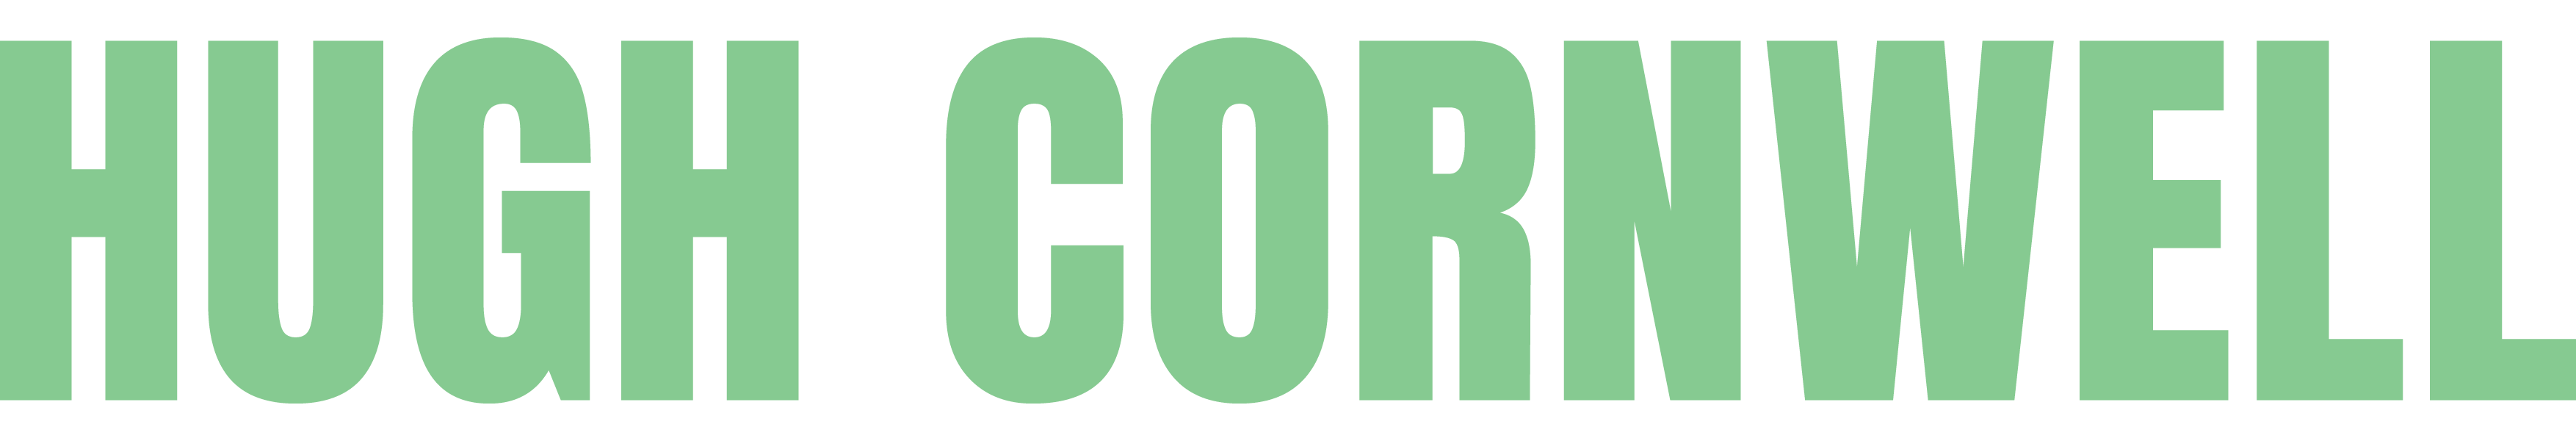 hugh cornwell logo